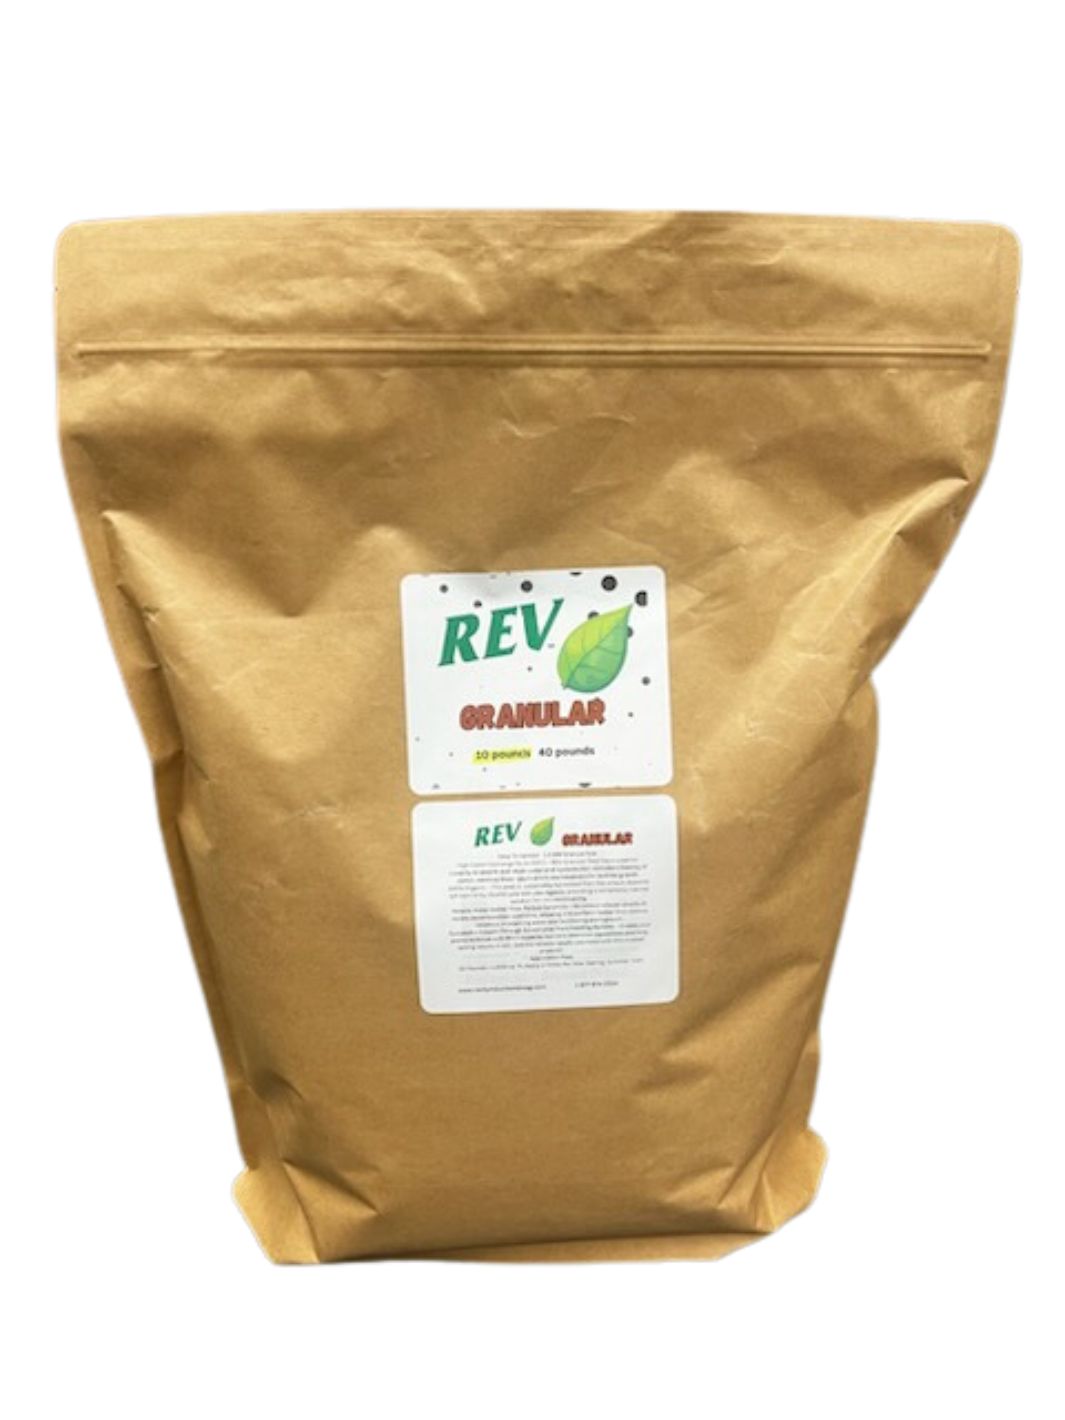 10 Pound Bag of REV Granular 1.5 MM Dakota Peat Soil